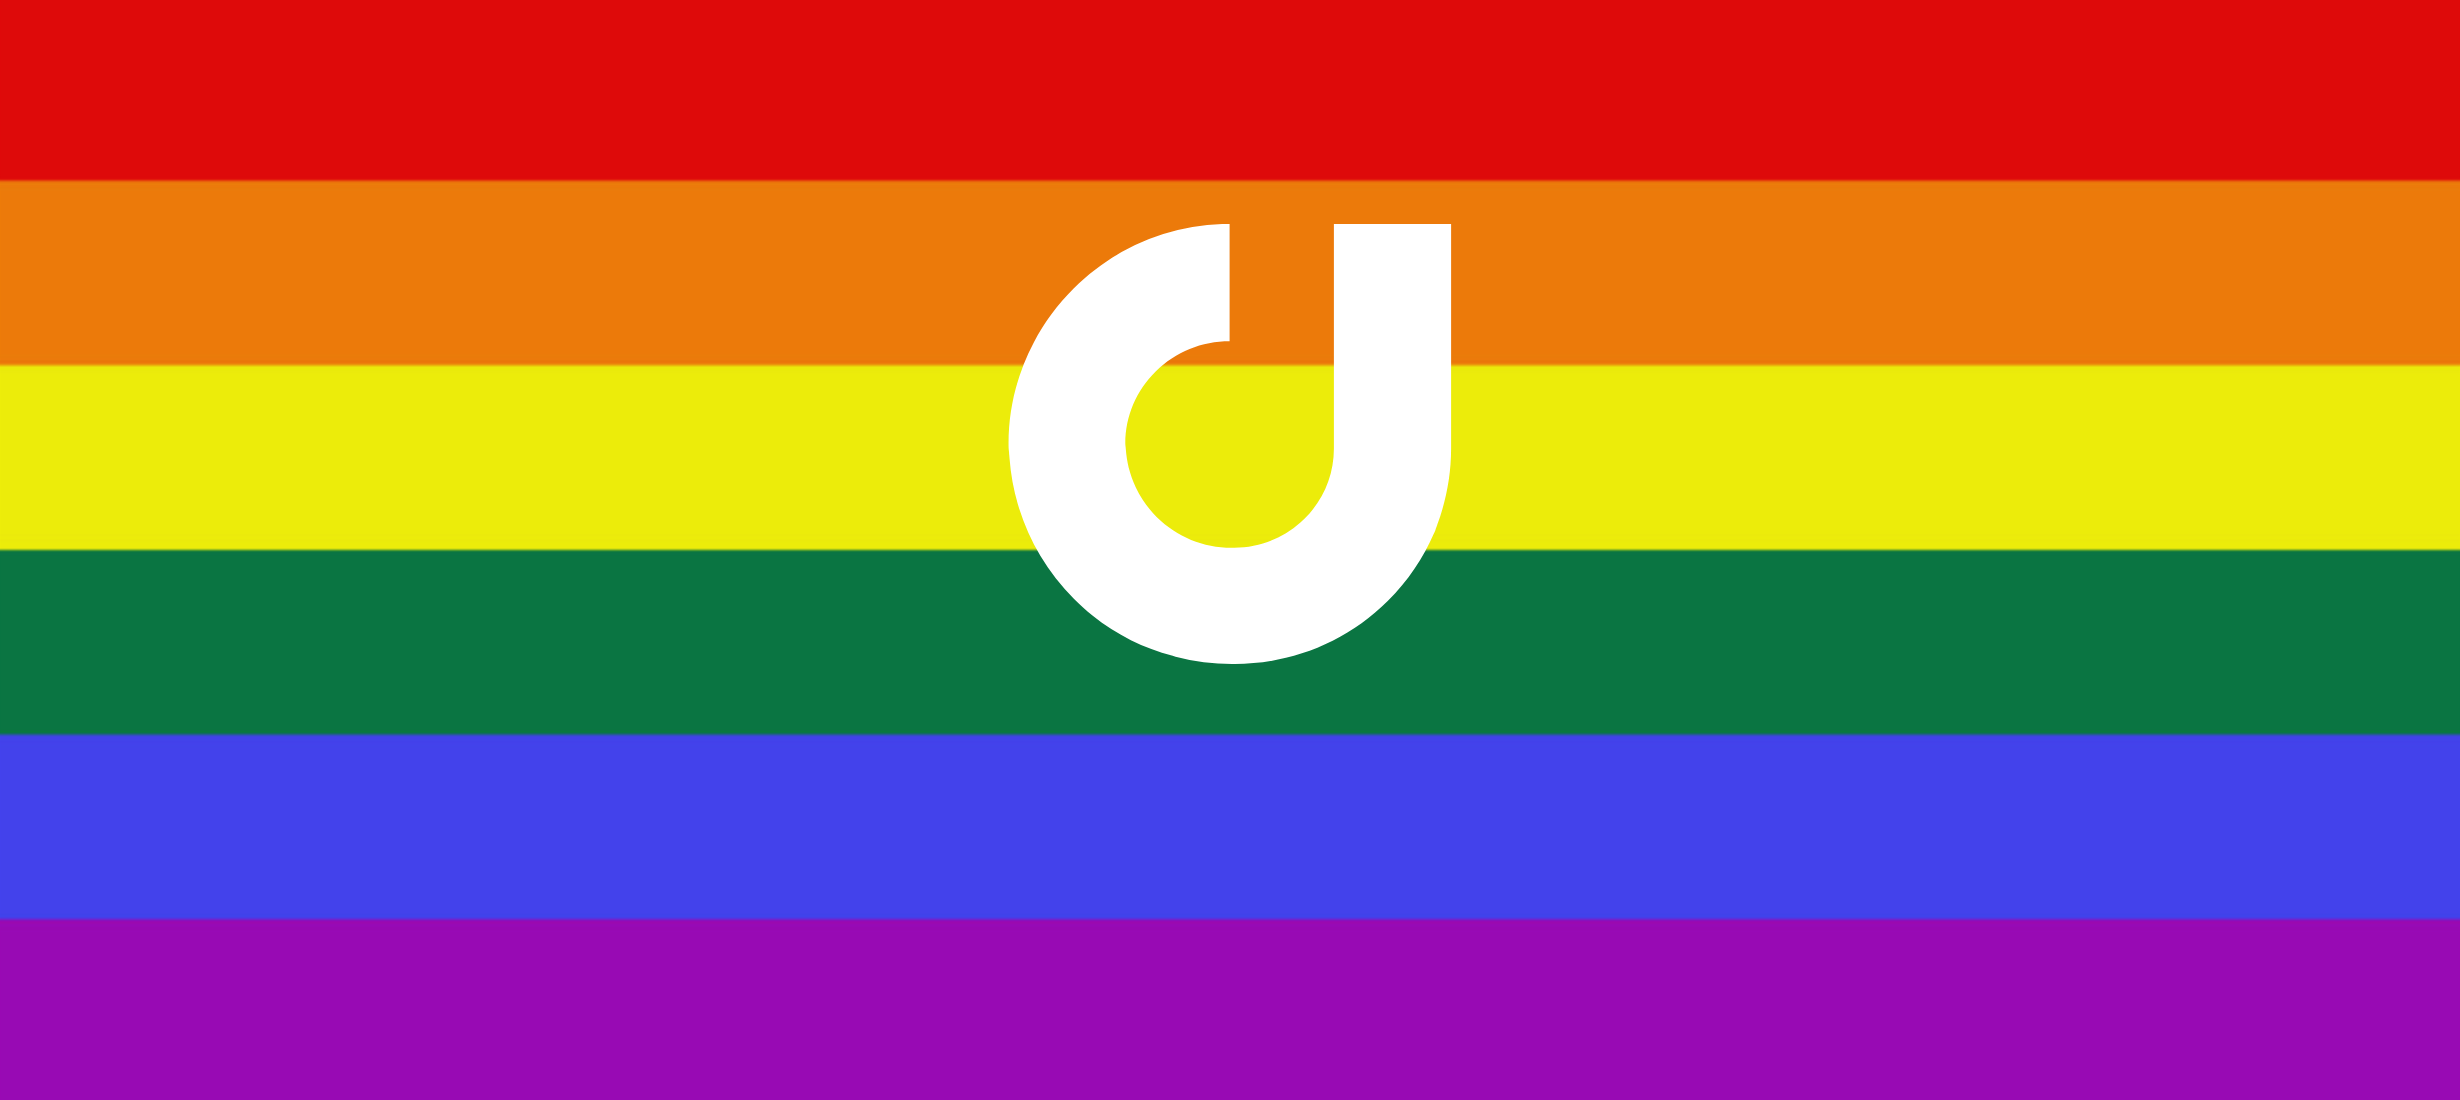 Digimind Pride (Blogpost Cover)